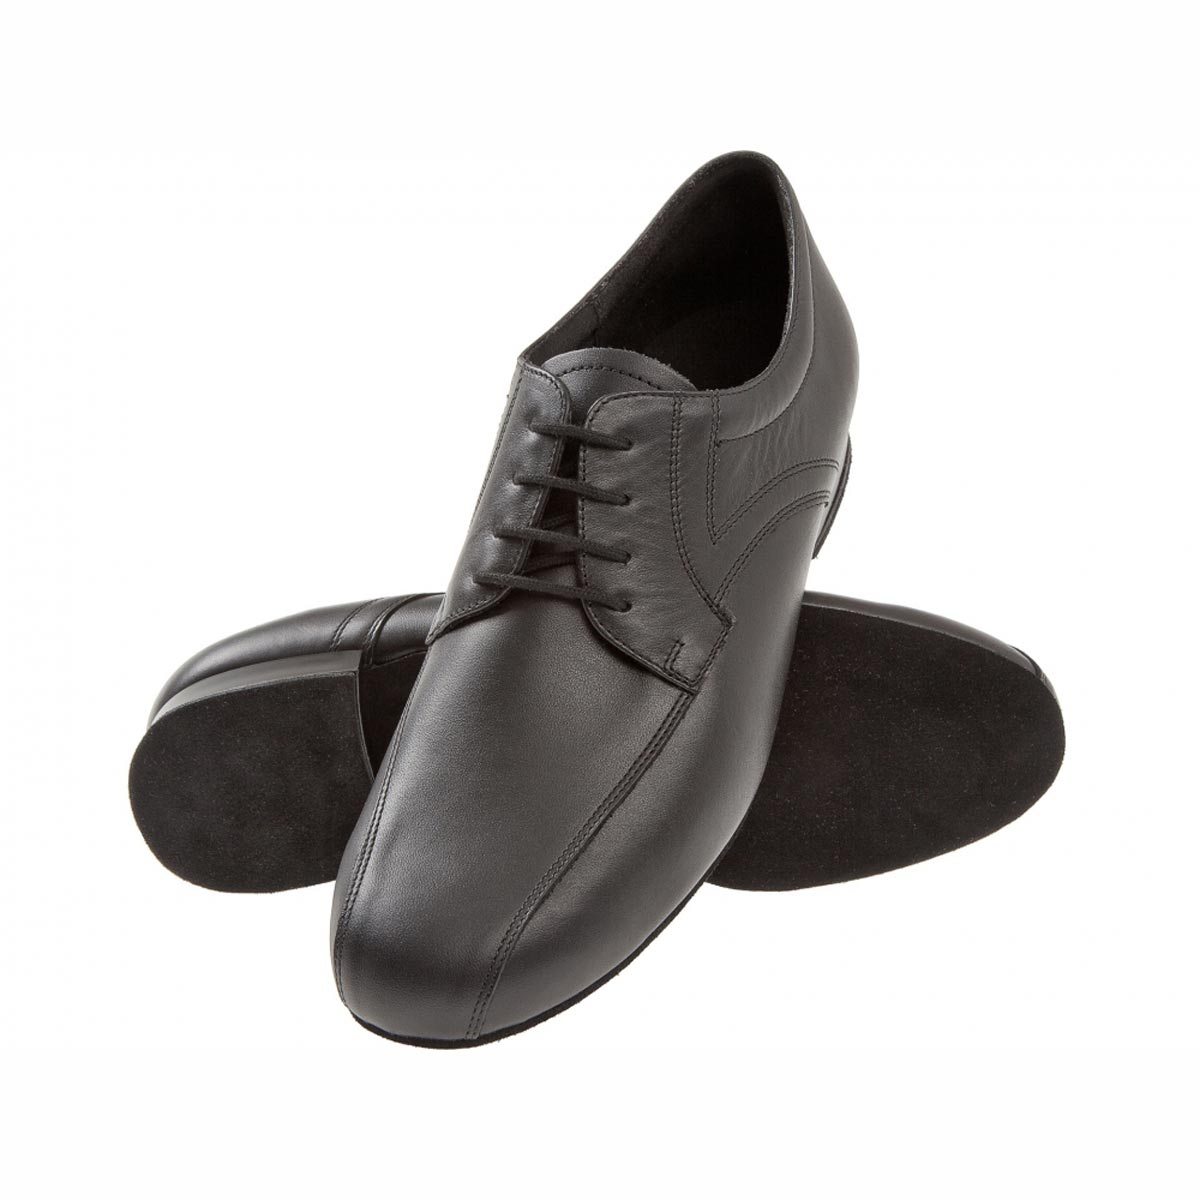 Made in Germany Large - 2 cm Ballroom Diamant Hommes Chaussures de Danse 180-025-001 Confortable S/ùede Noir